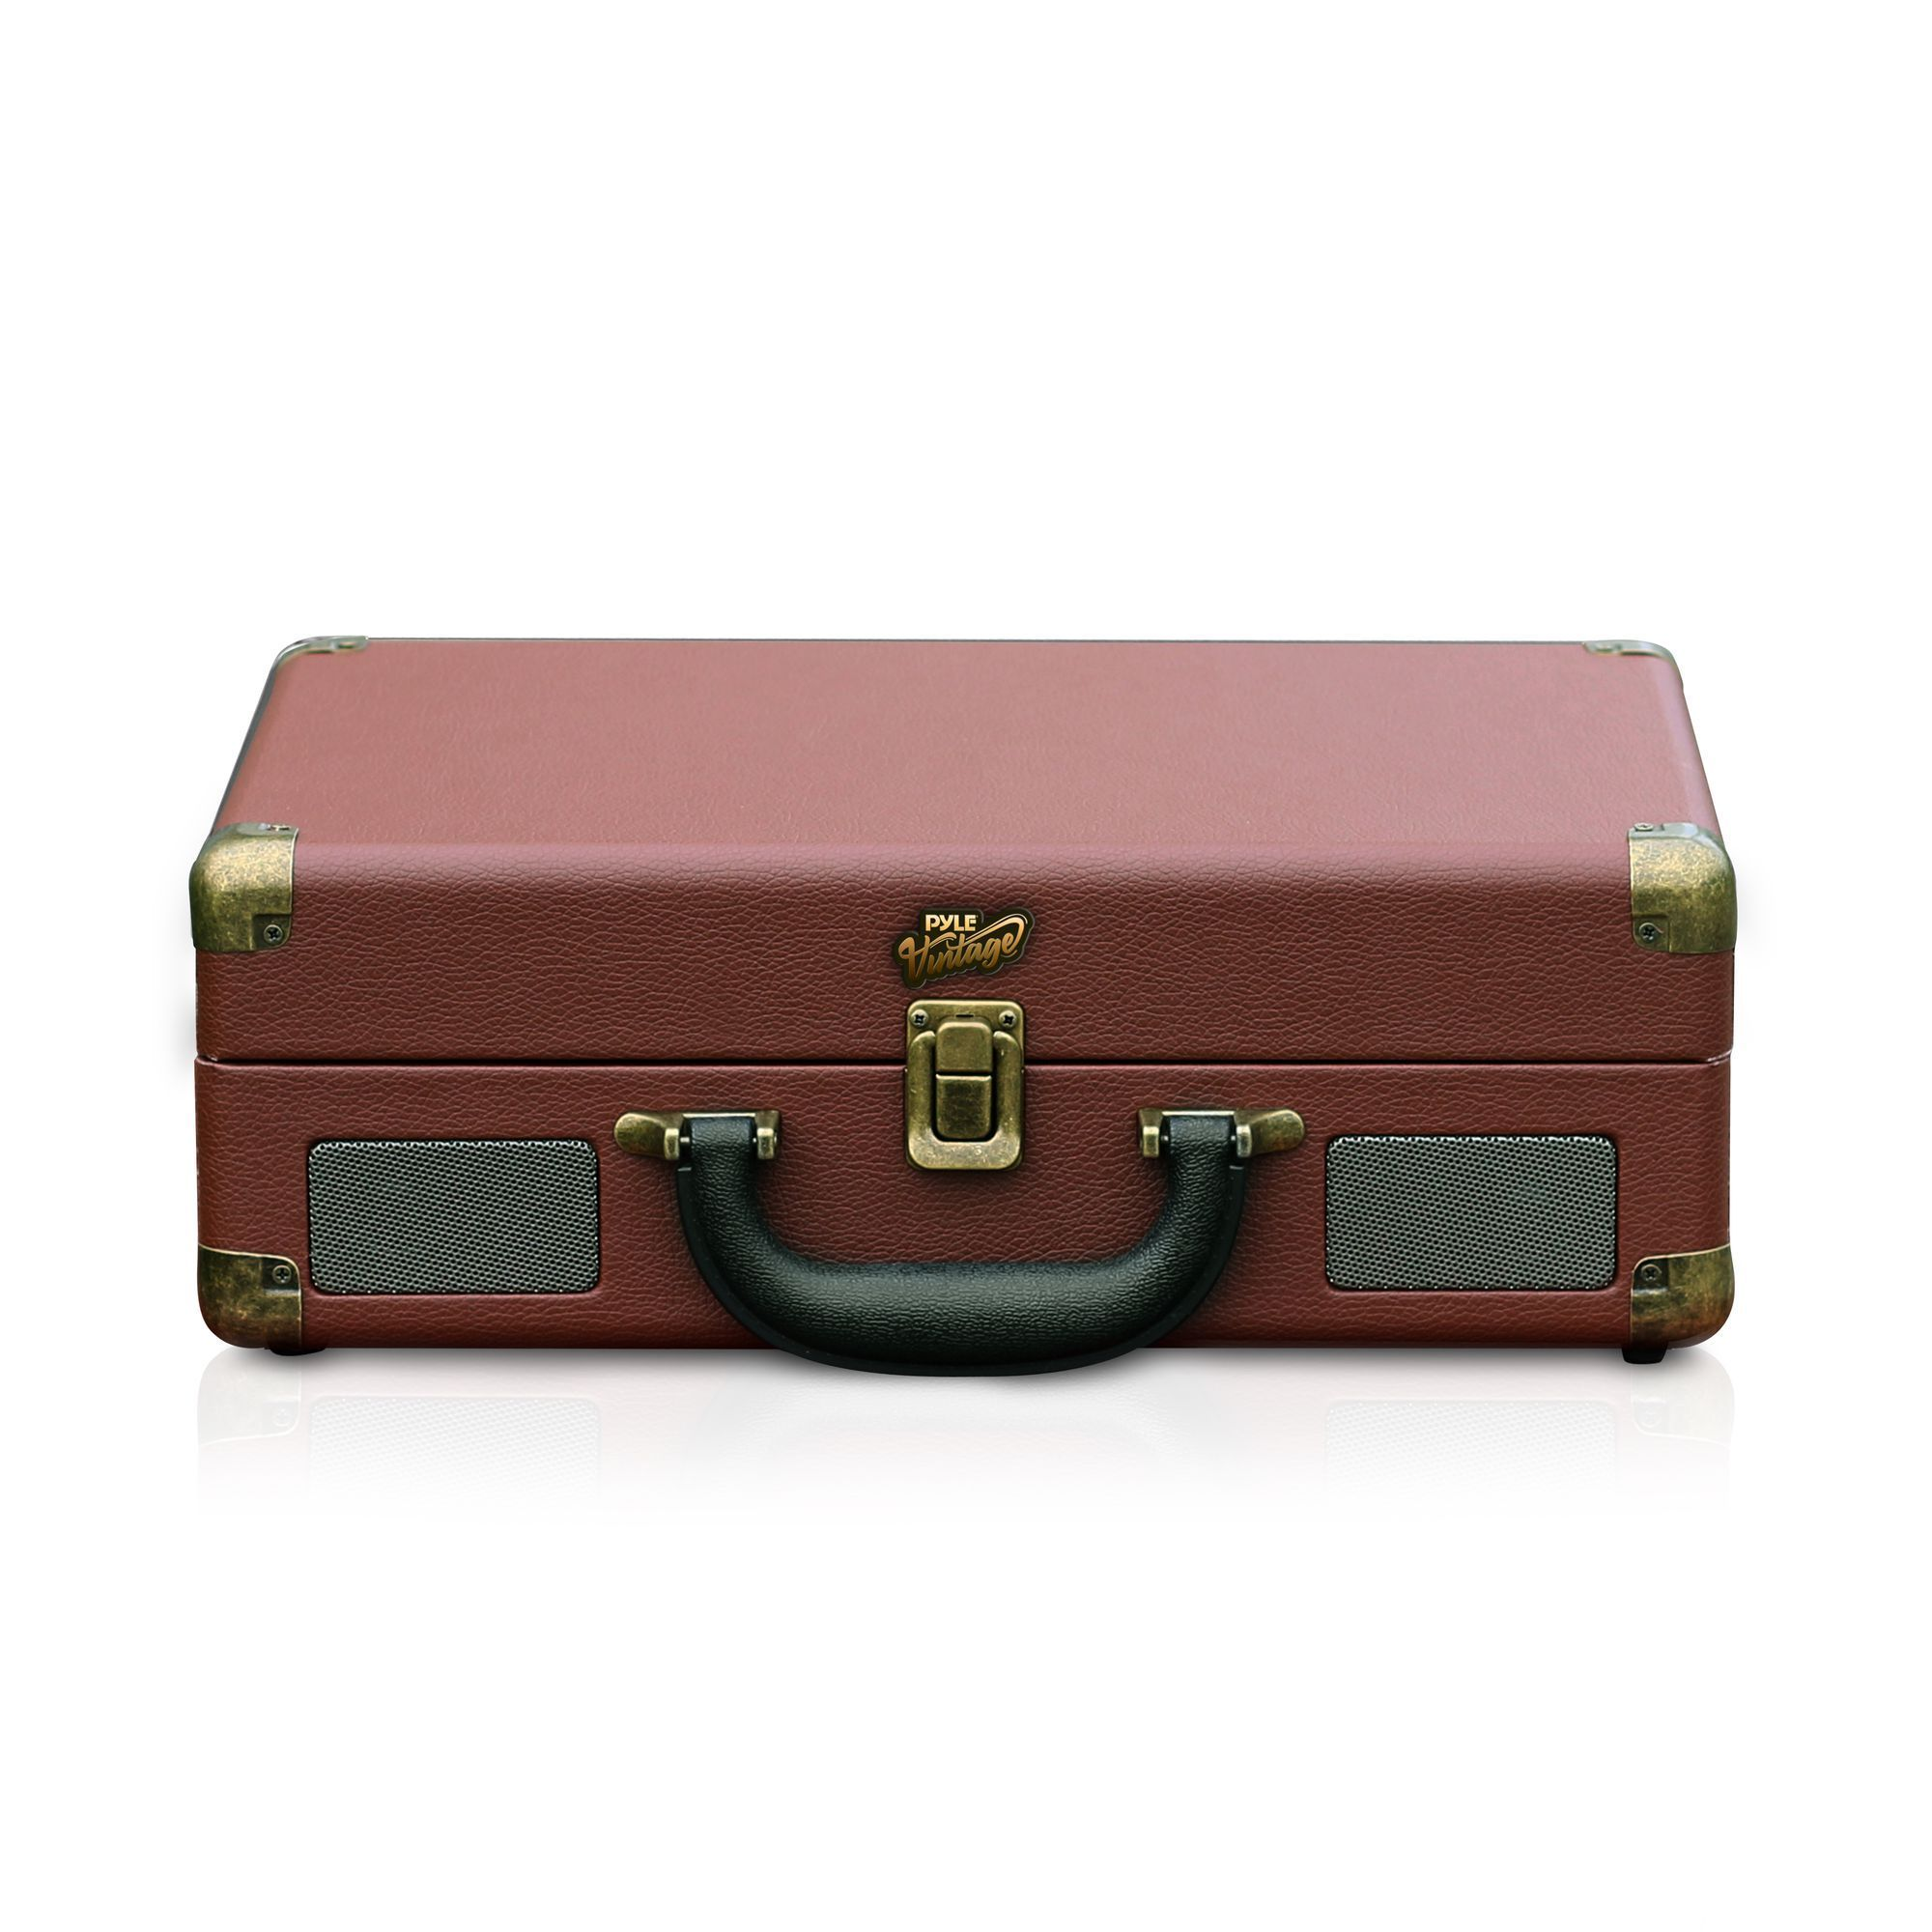 Pyle Classic Briefcase Vintage Style Turntable, Bluetooth Speaker System - Brown (PVTTBT9BR)